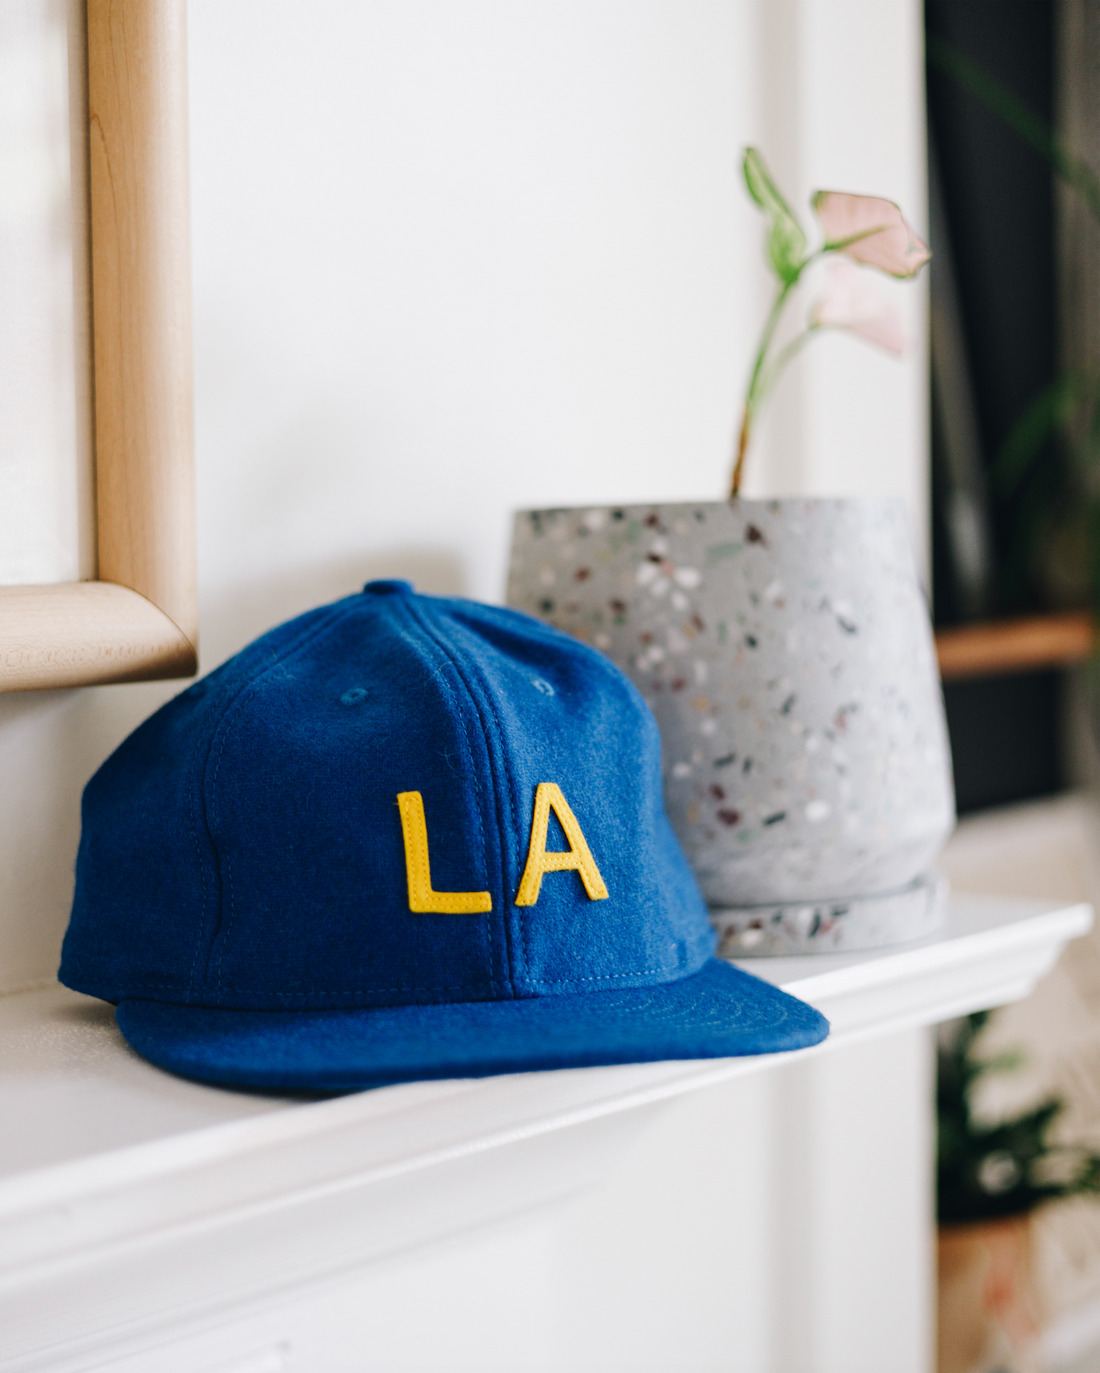 Royal Vintage Flatbill Hat - Los Angeles (Gold LA)